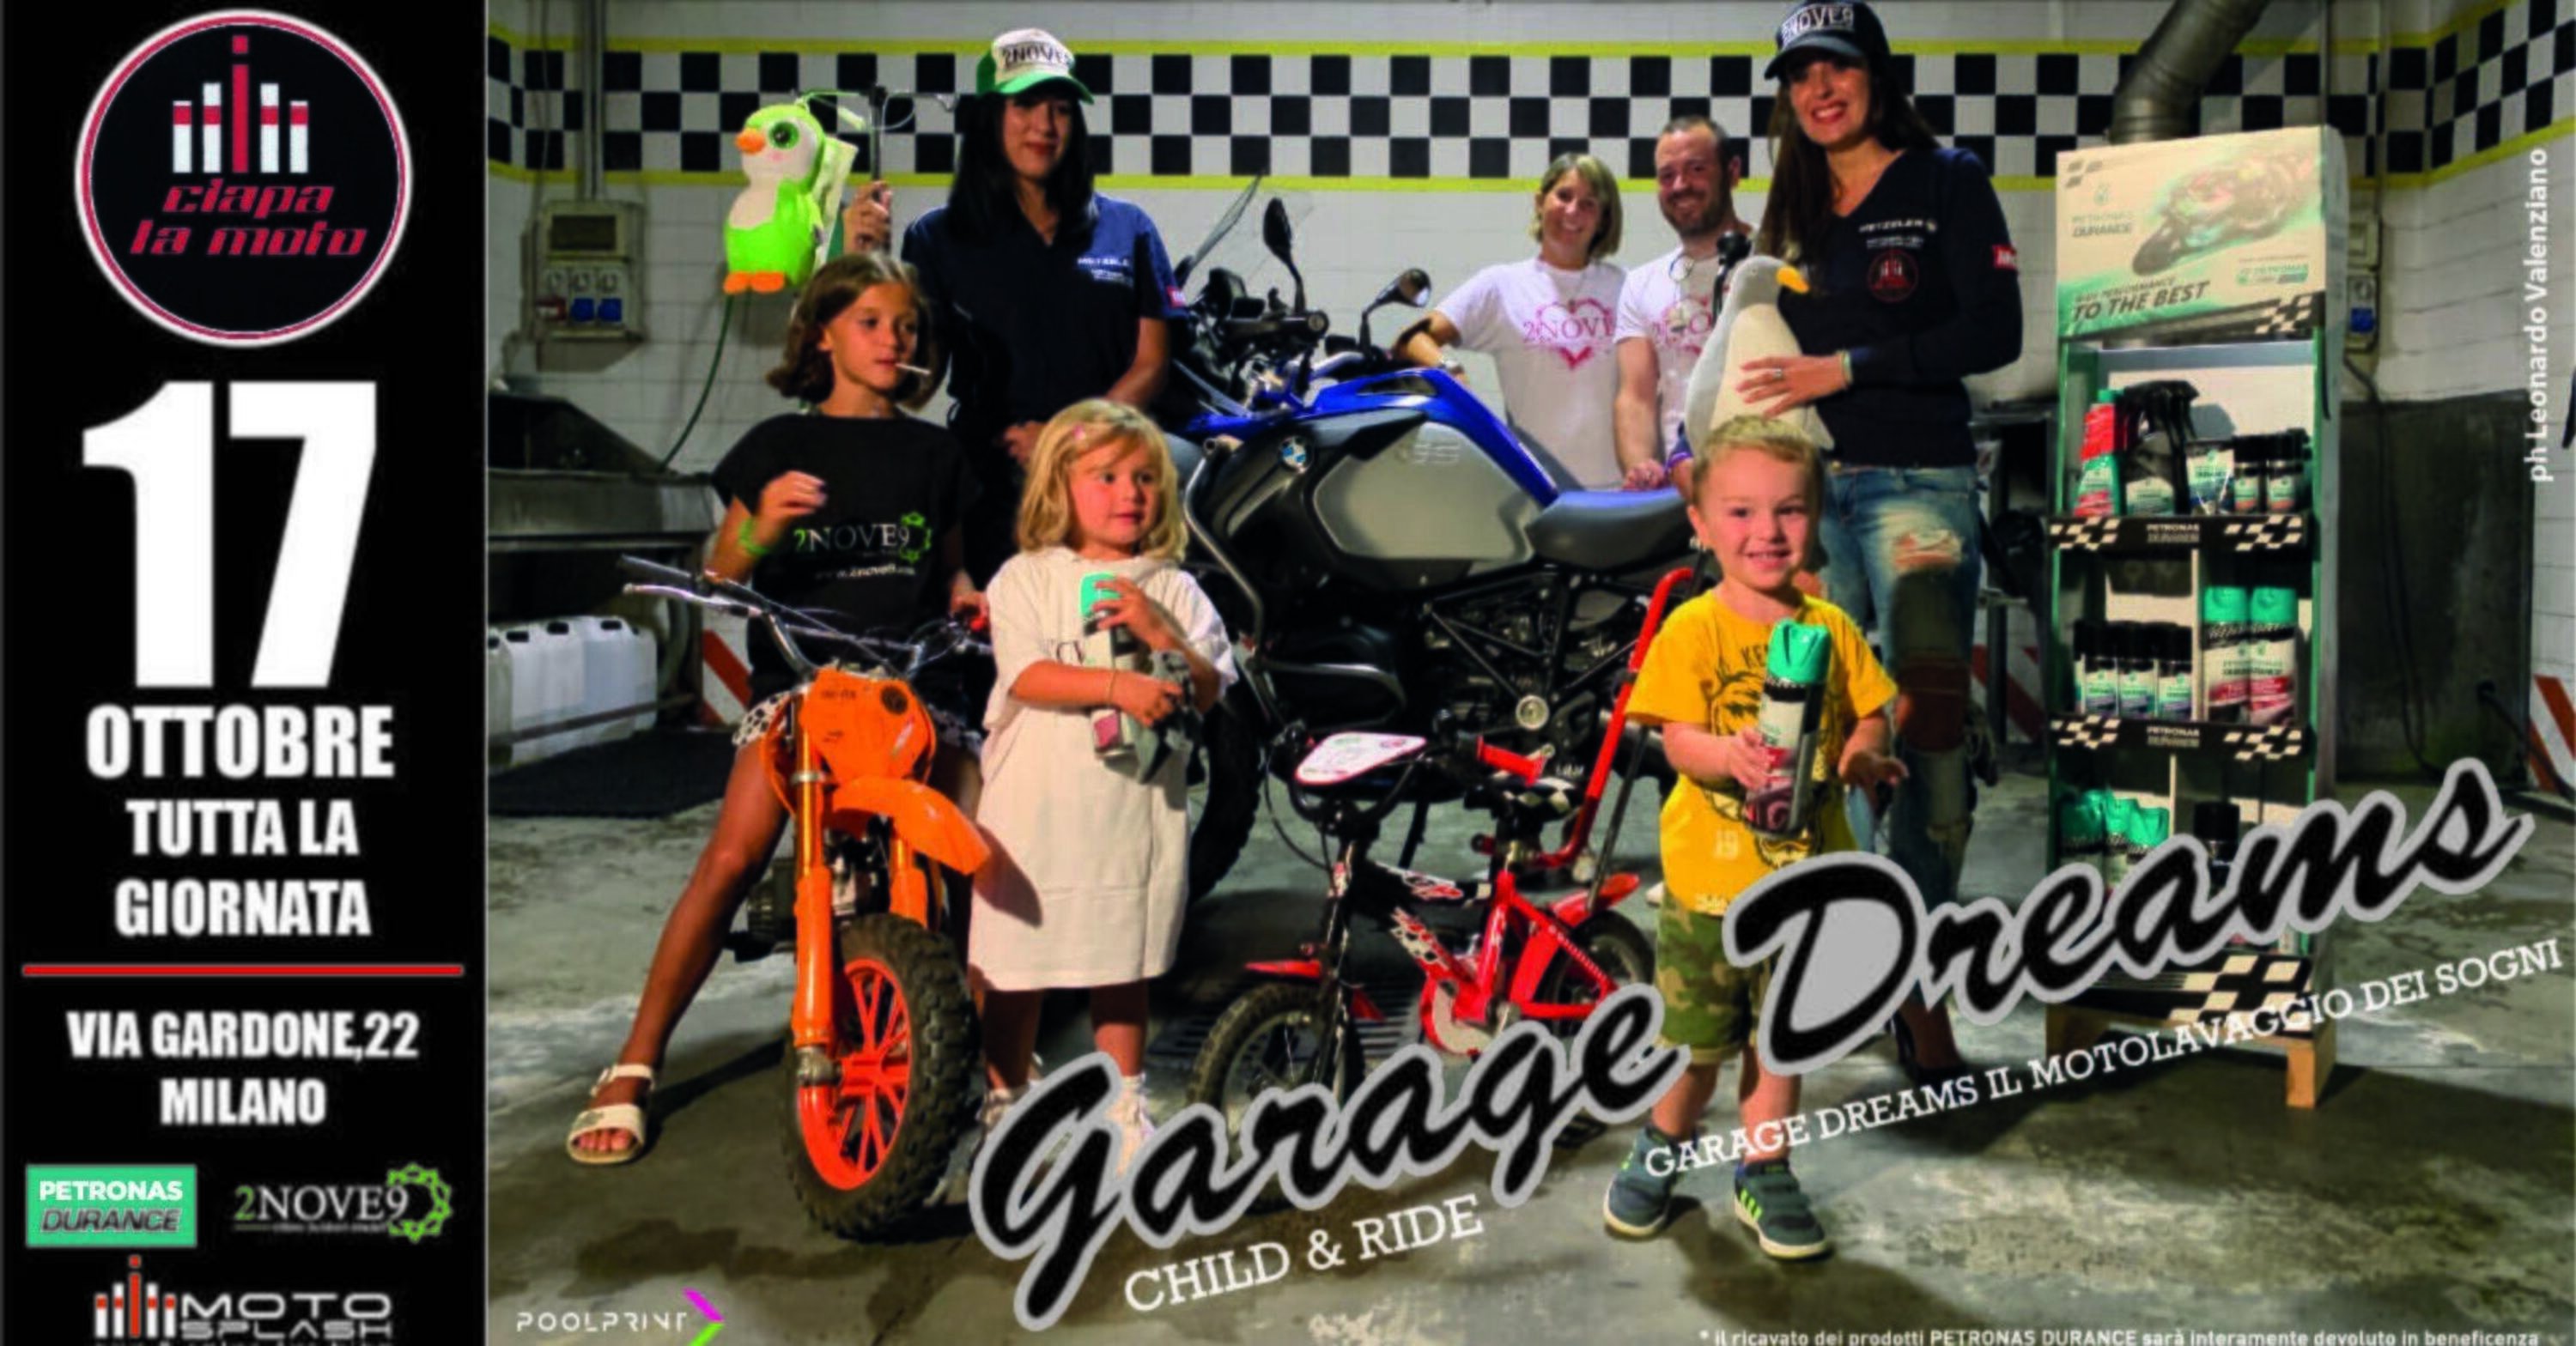 Garage Dreams: da Ciapa la Moto sabato 17 ottobre